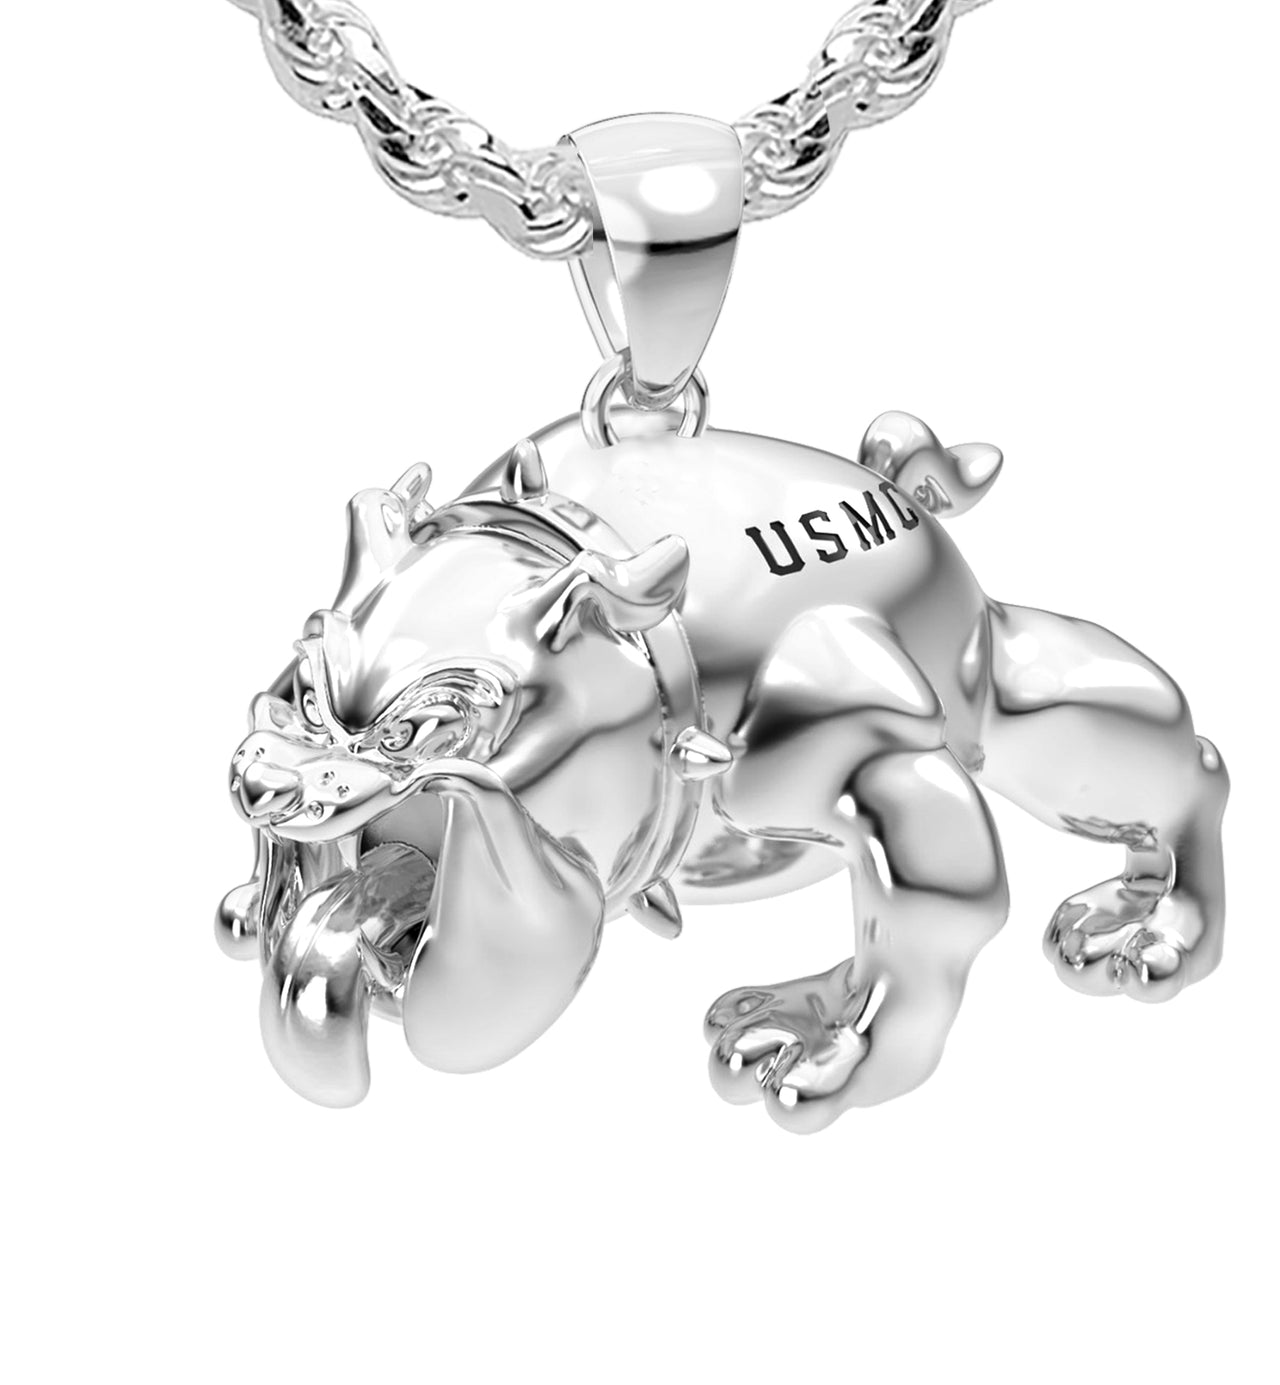 Men's XL Heavy Solid 925 Sterling Silver Marine Corps USMC Devil Dog Pendant Necklace, 55g